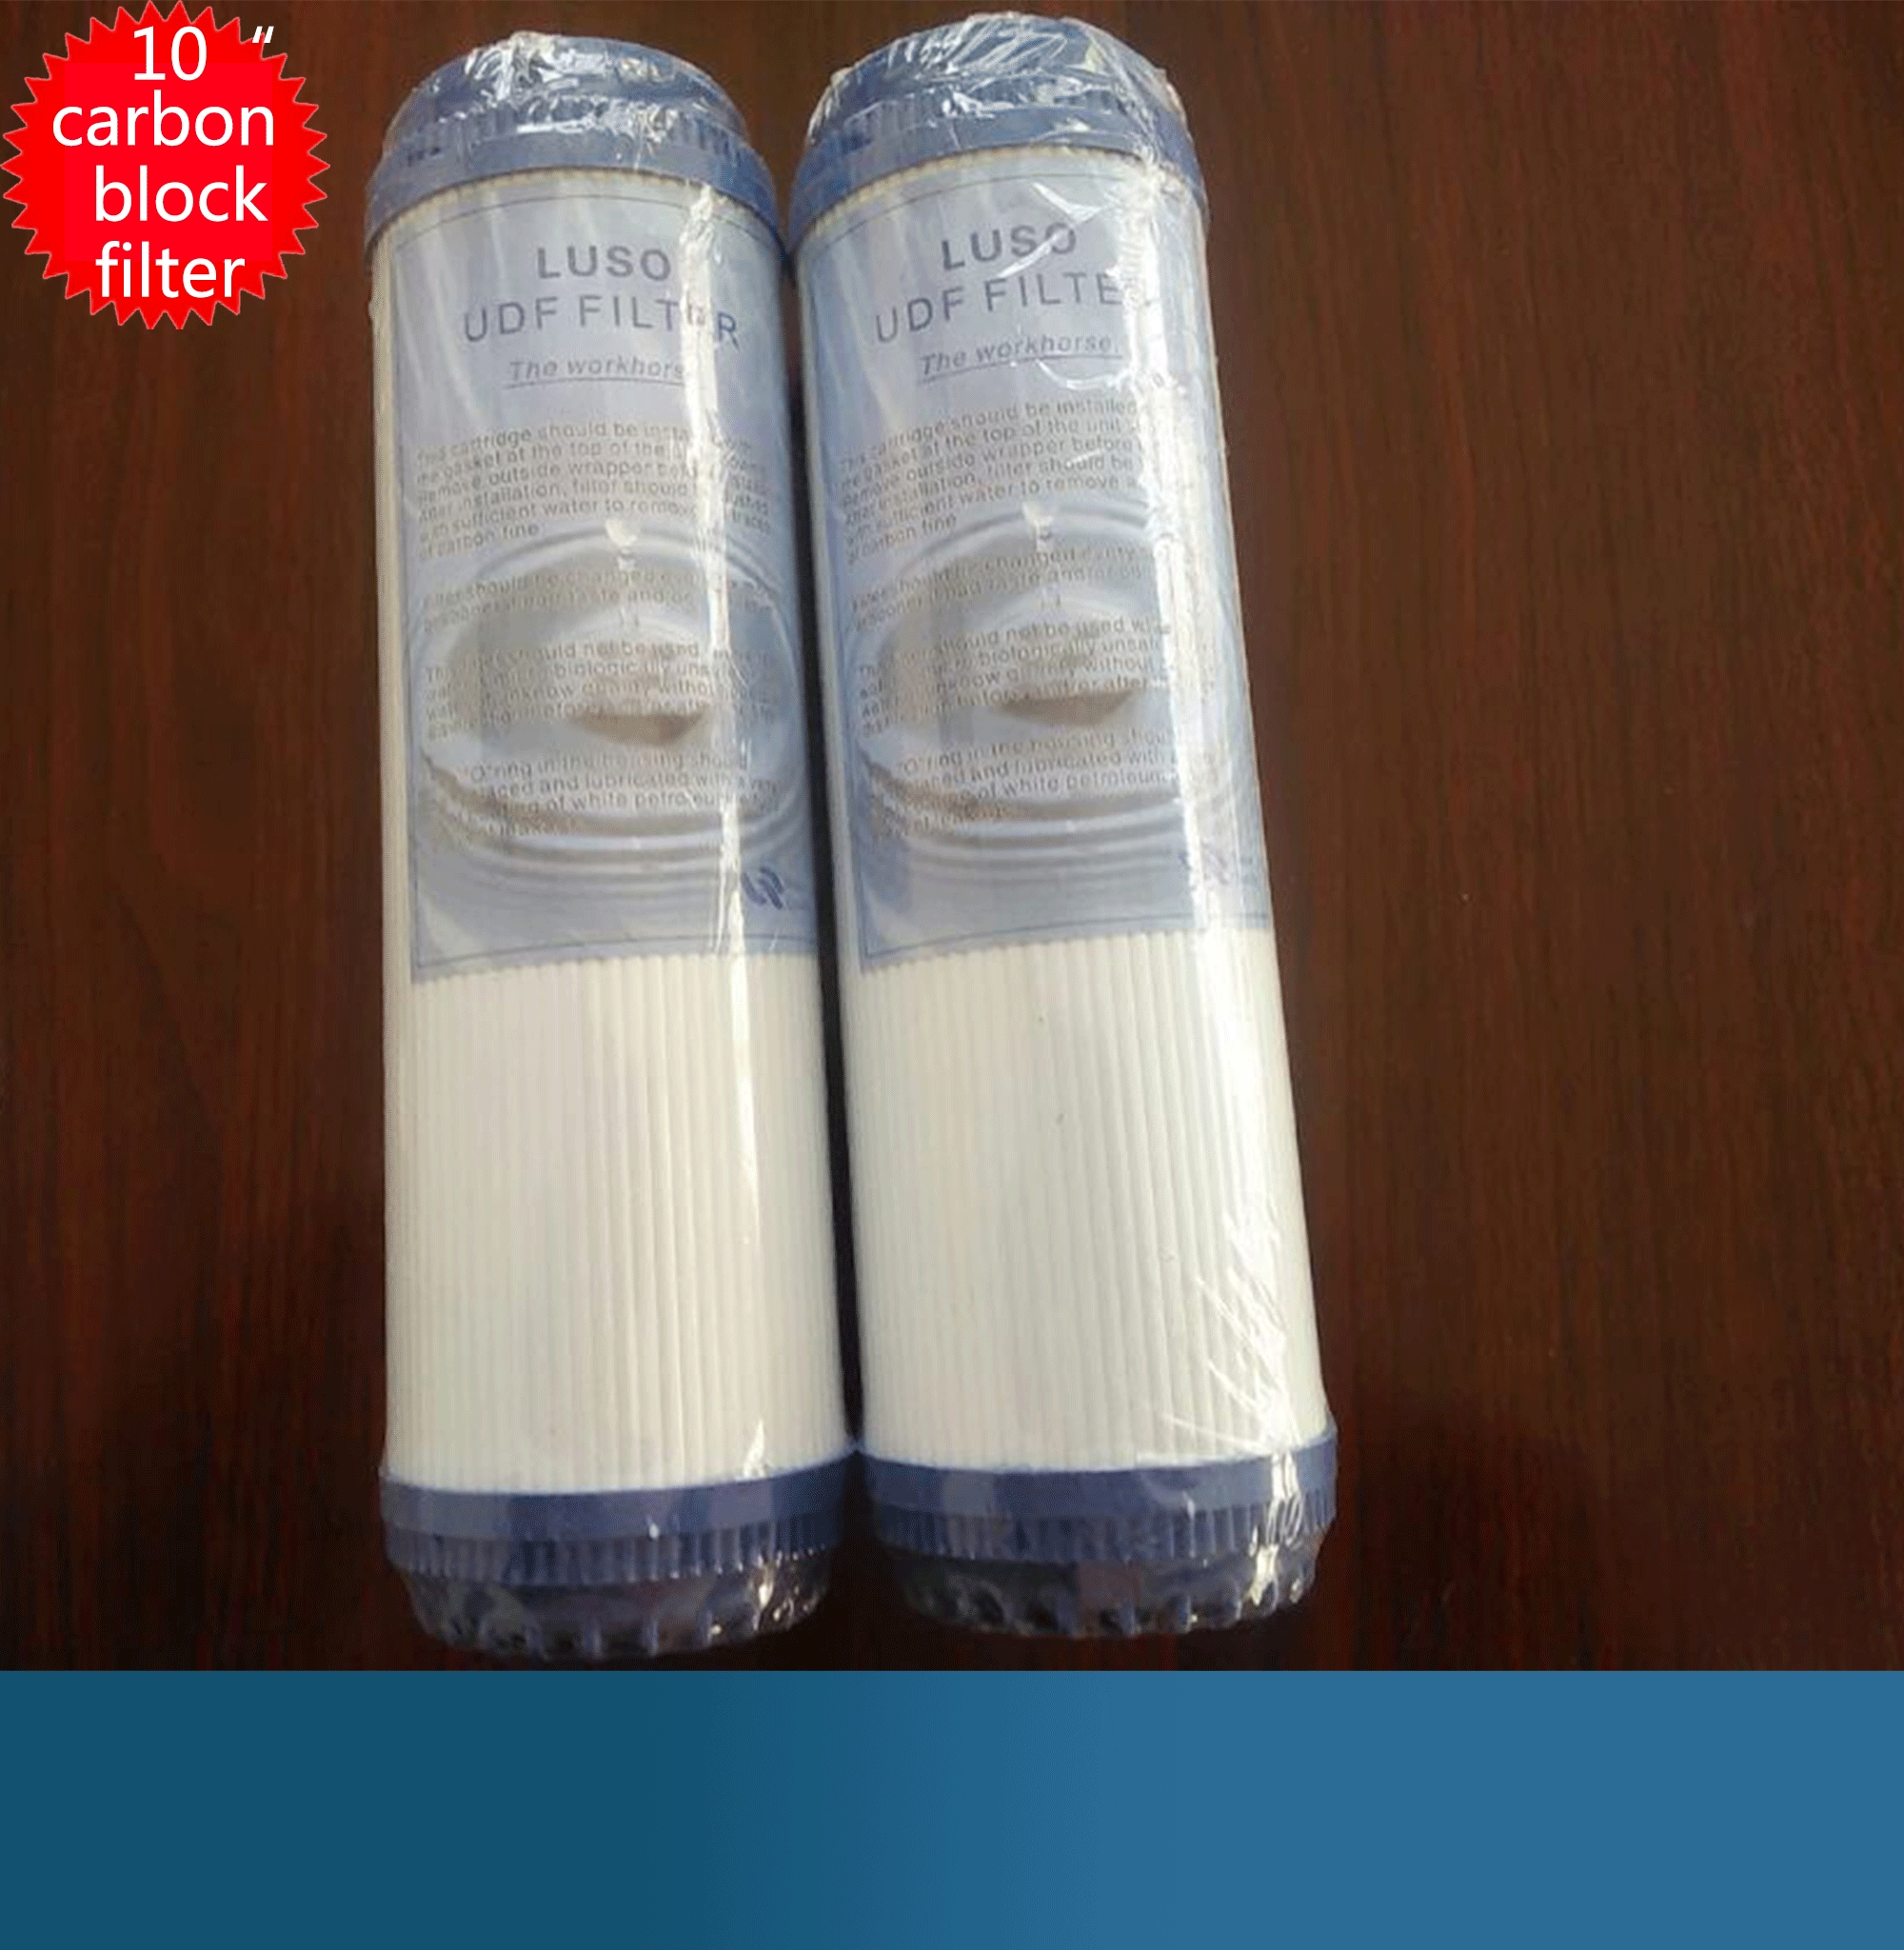  10 "UDF Water Filter Cartridge Granular Activated Carbon Block Filter Cartridge Manufactures